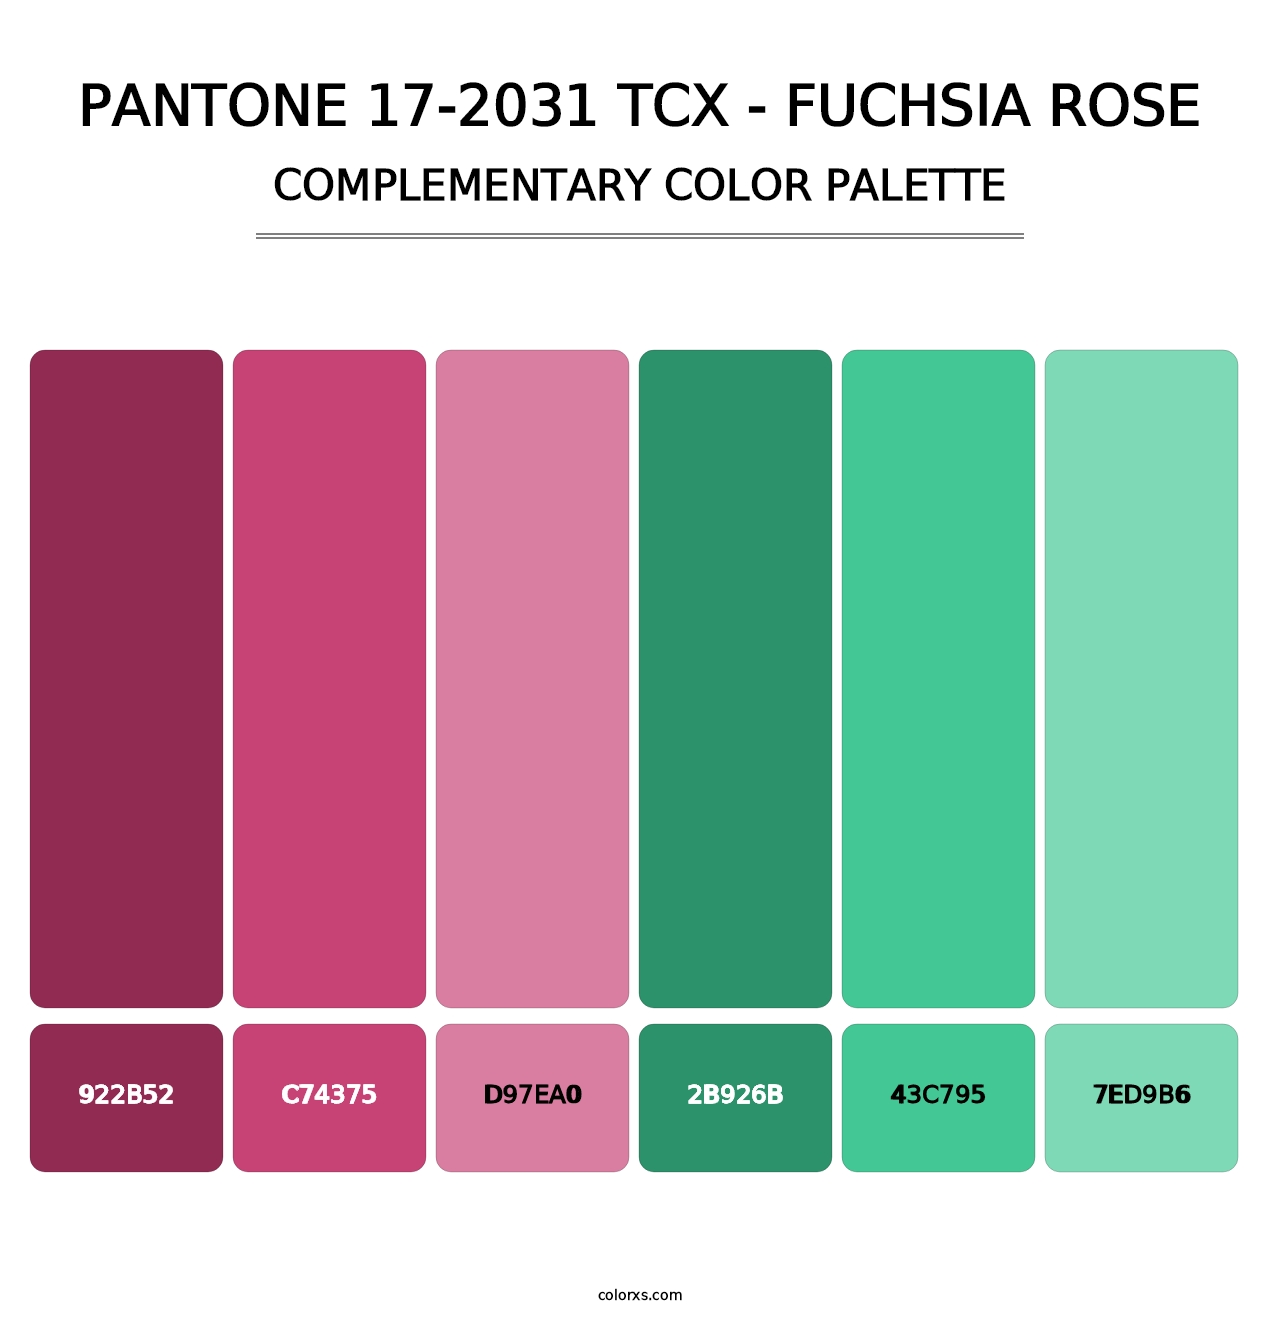 PANTONE 17-2031 TCX - Fuchsia Rose - Complementary Color Palette